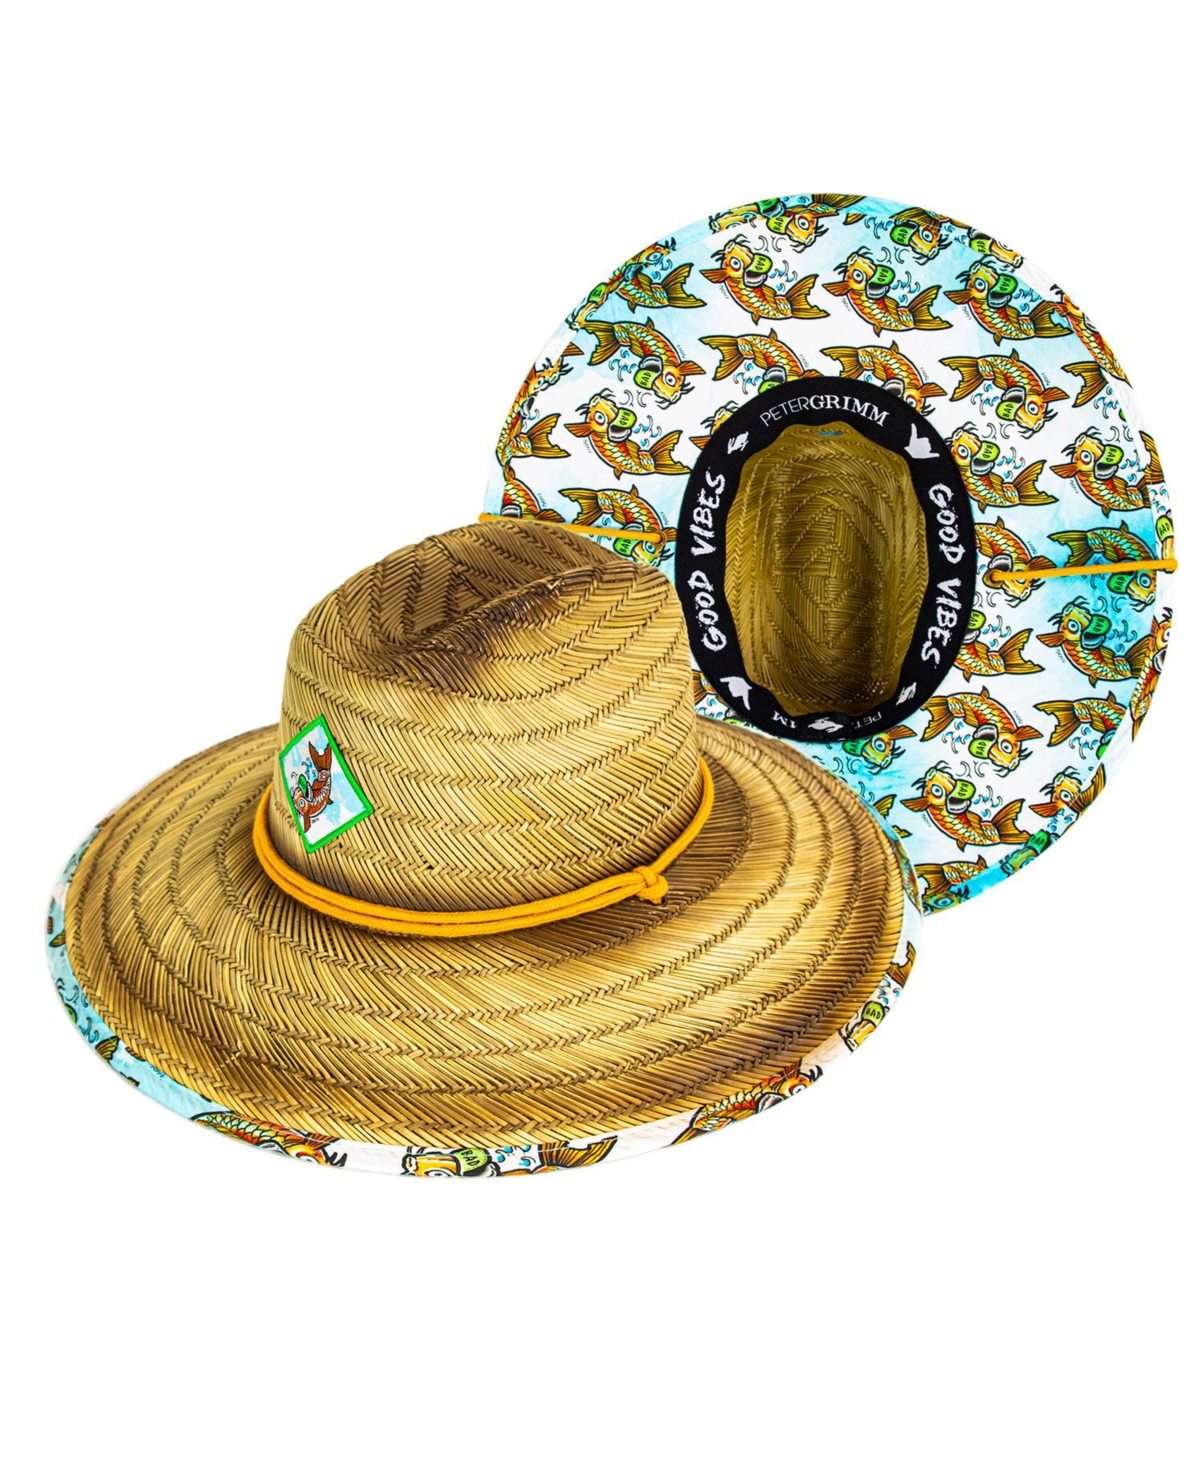 Badfish Sublime Lifeguard Hat - Tea stain